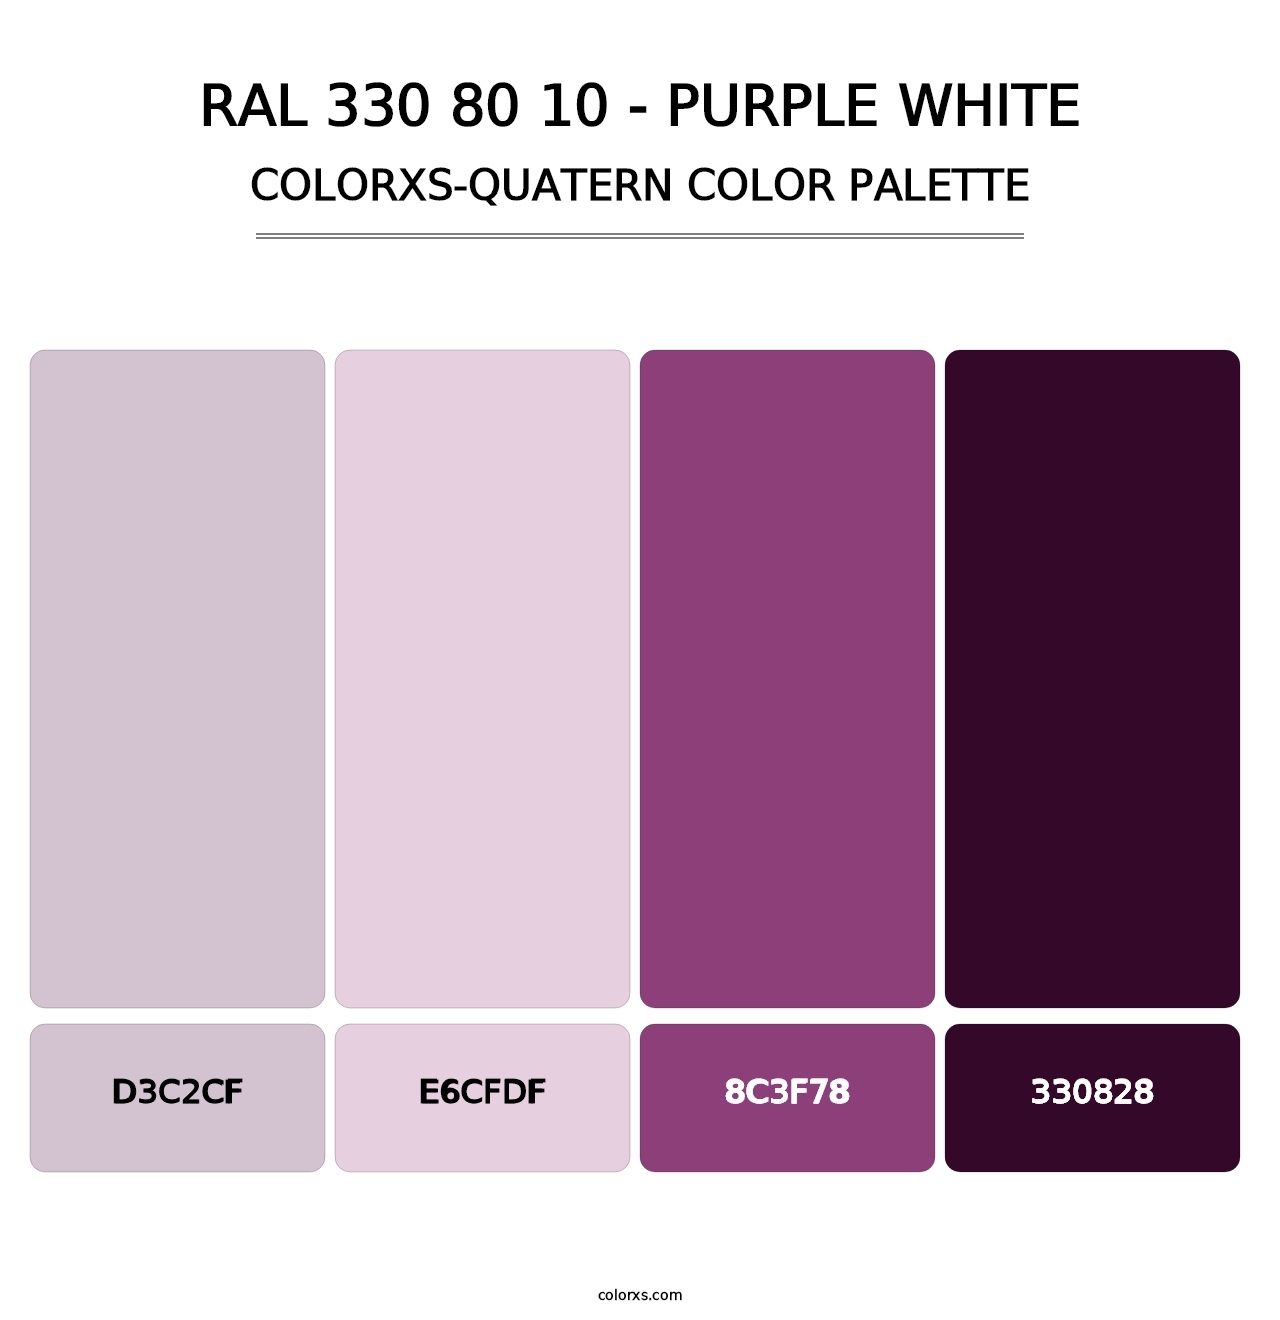 RAL 330 80 10 - Purple White - Colorxs Quatern Palette